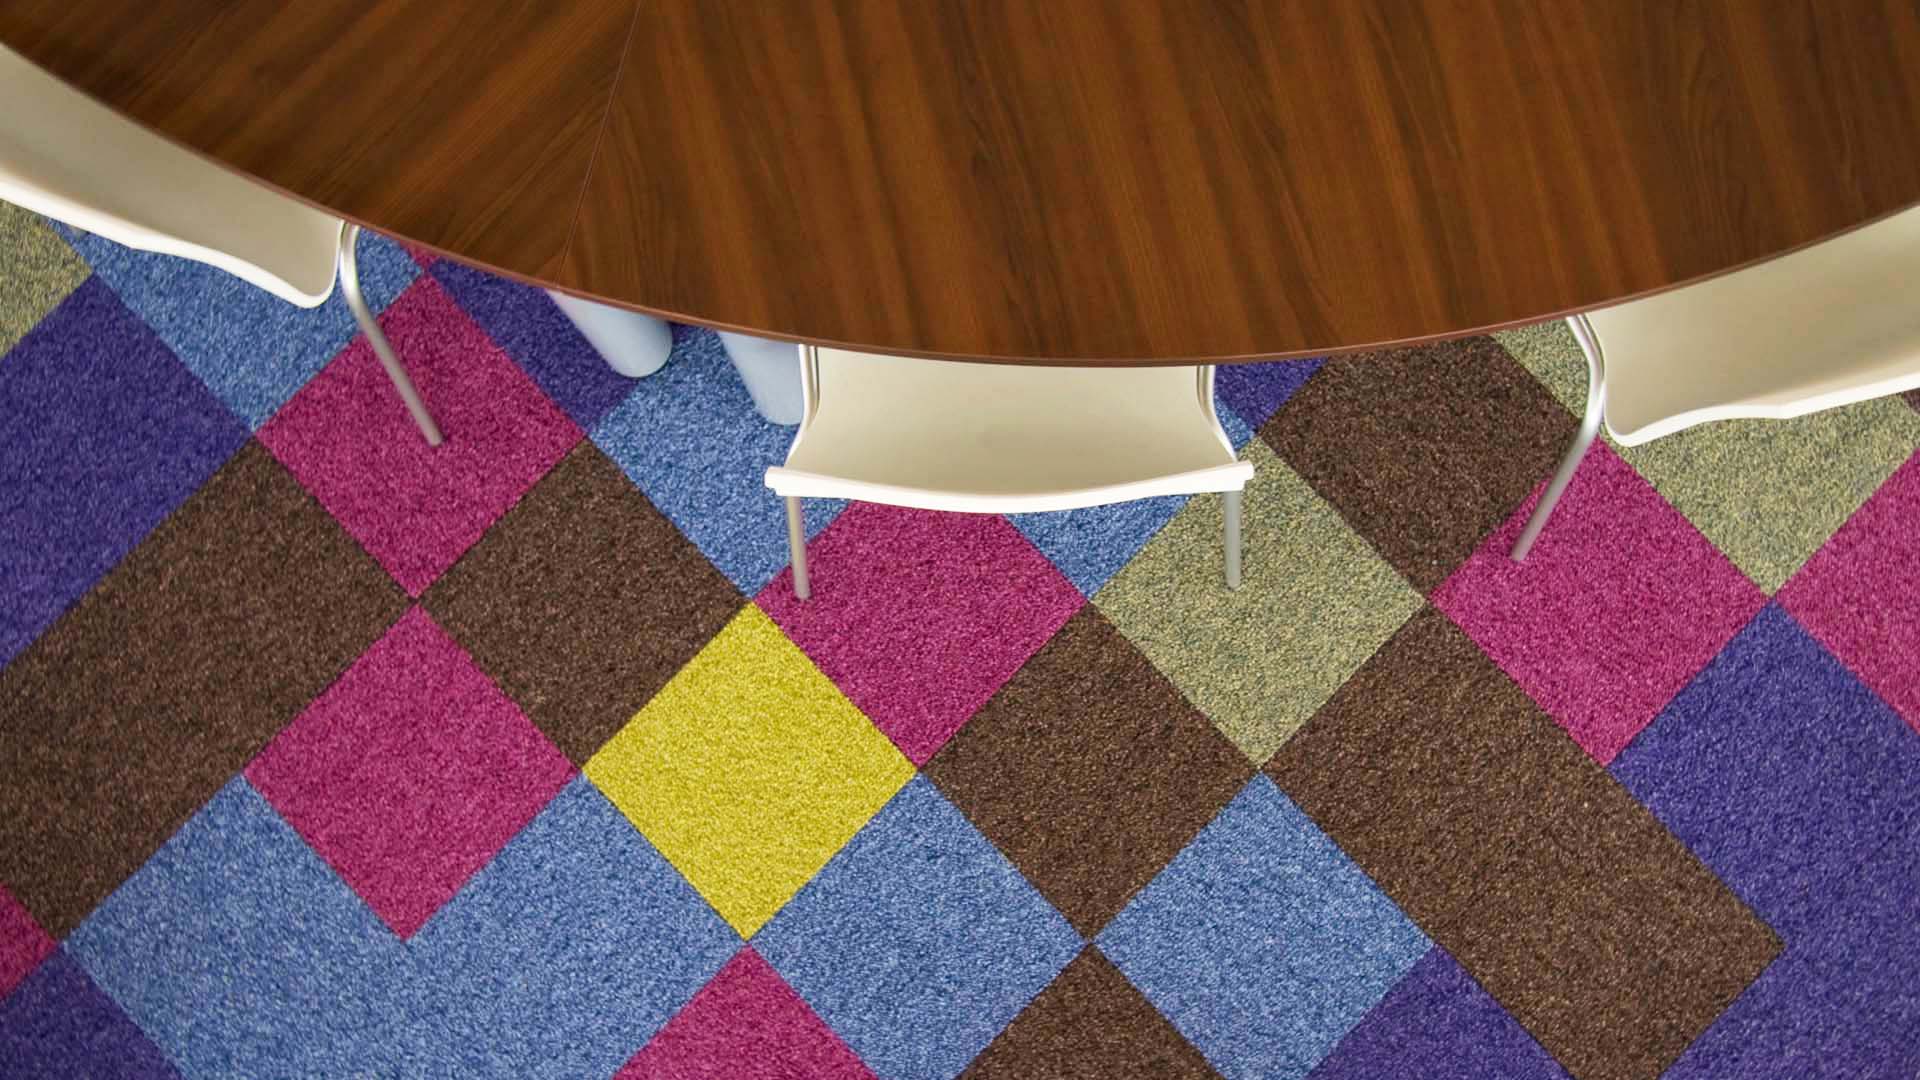 interface tapijttegels patroon